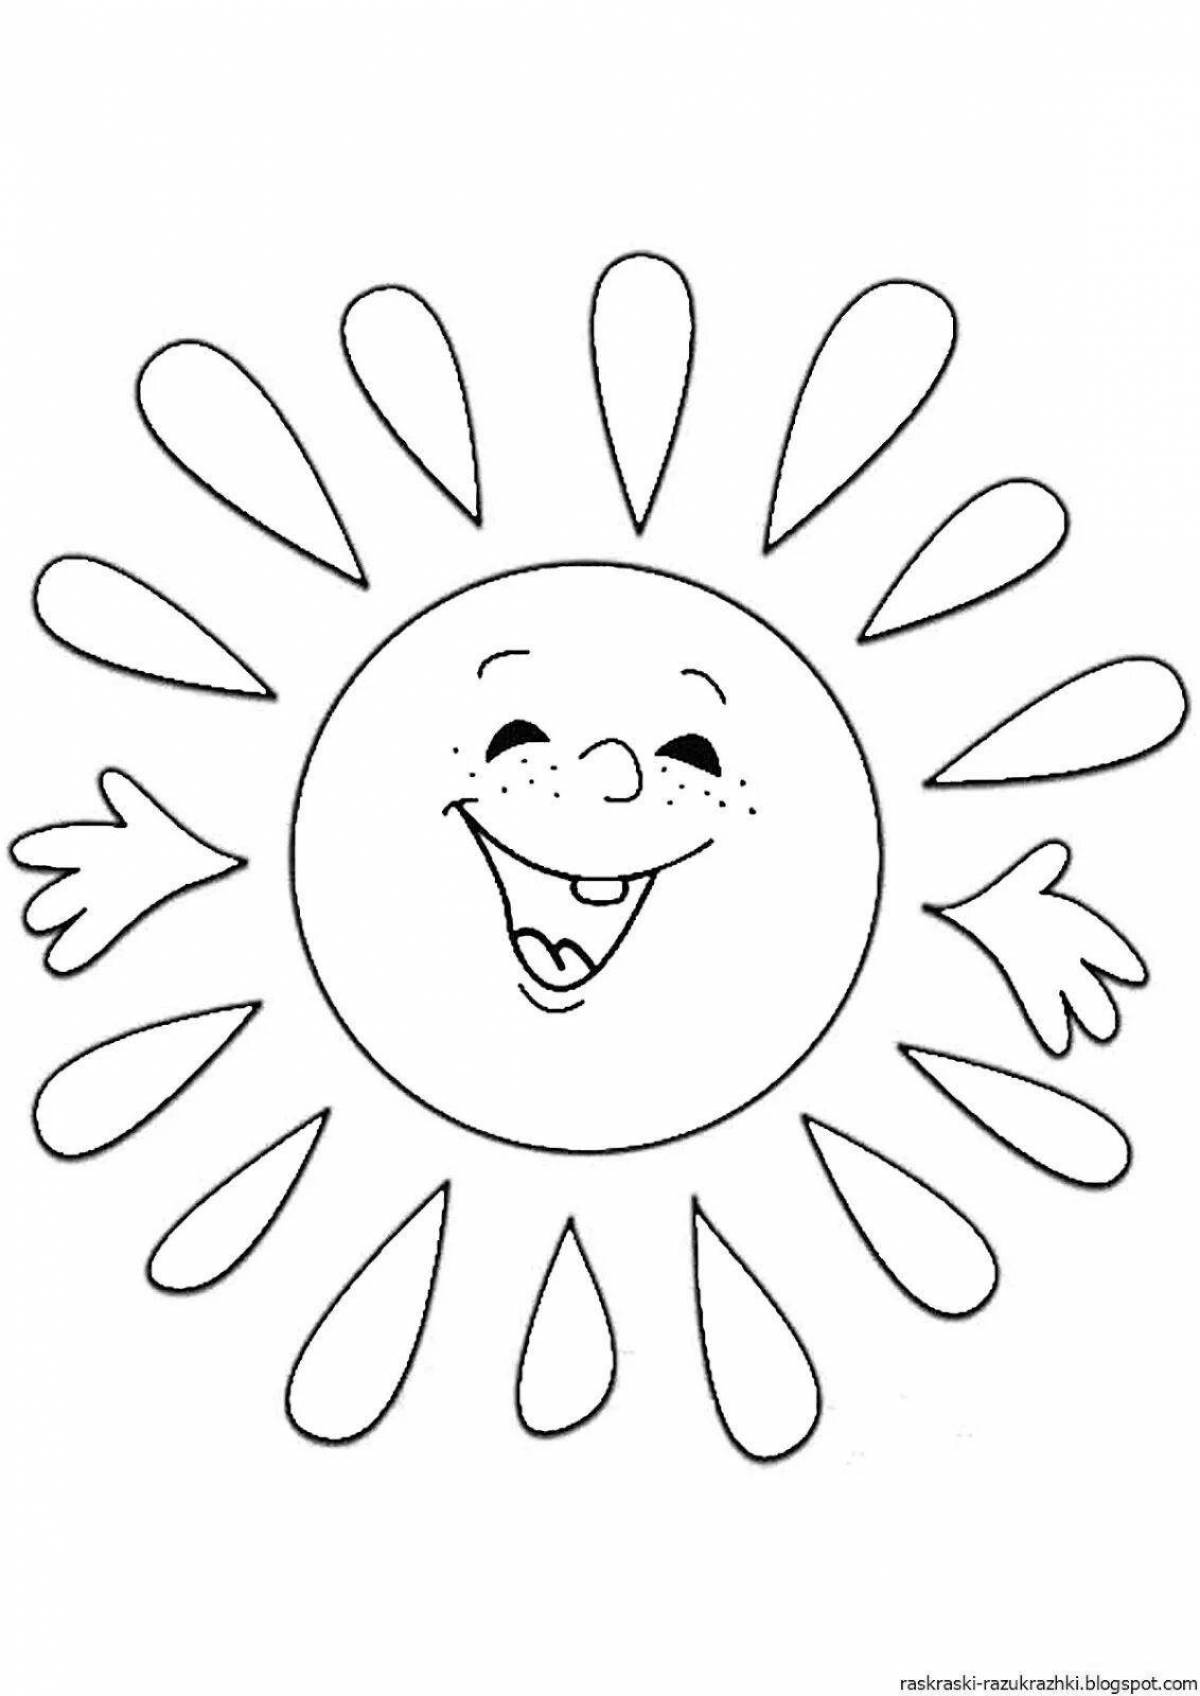 Joyful coloring sun for children 4-5 years old